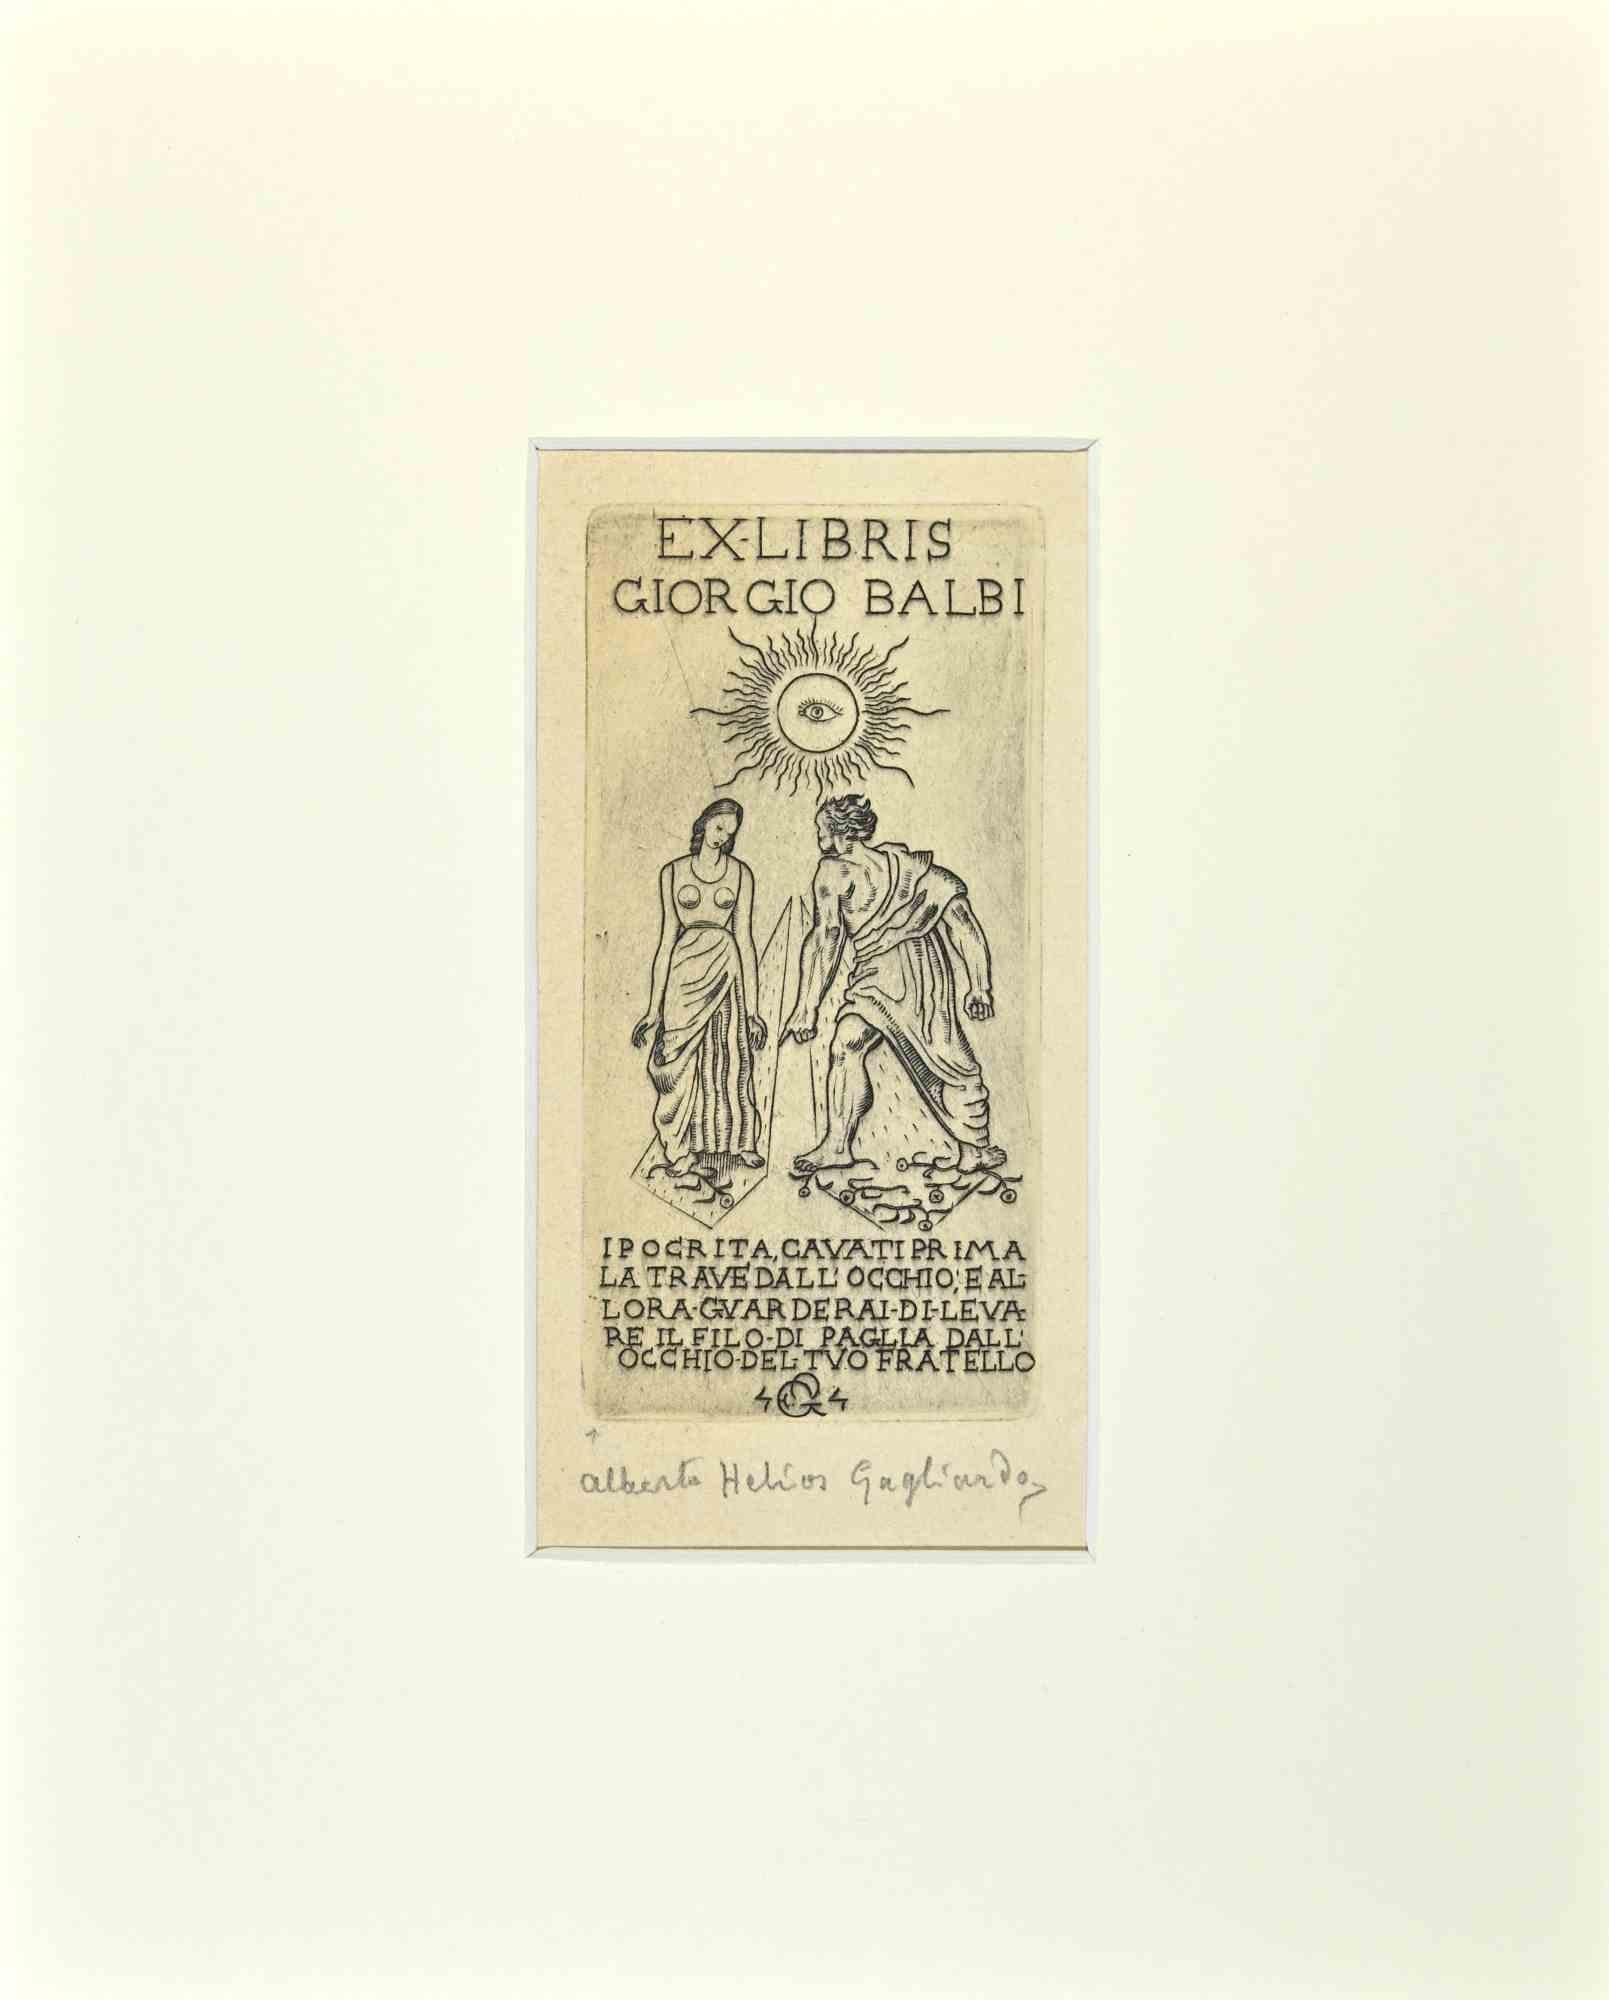  Alberto Helios Gagliardo Figurative Print - Ex Libris  - Giorgio Balbi  - Etching  - Mid-20th Century